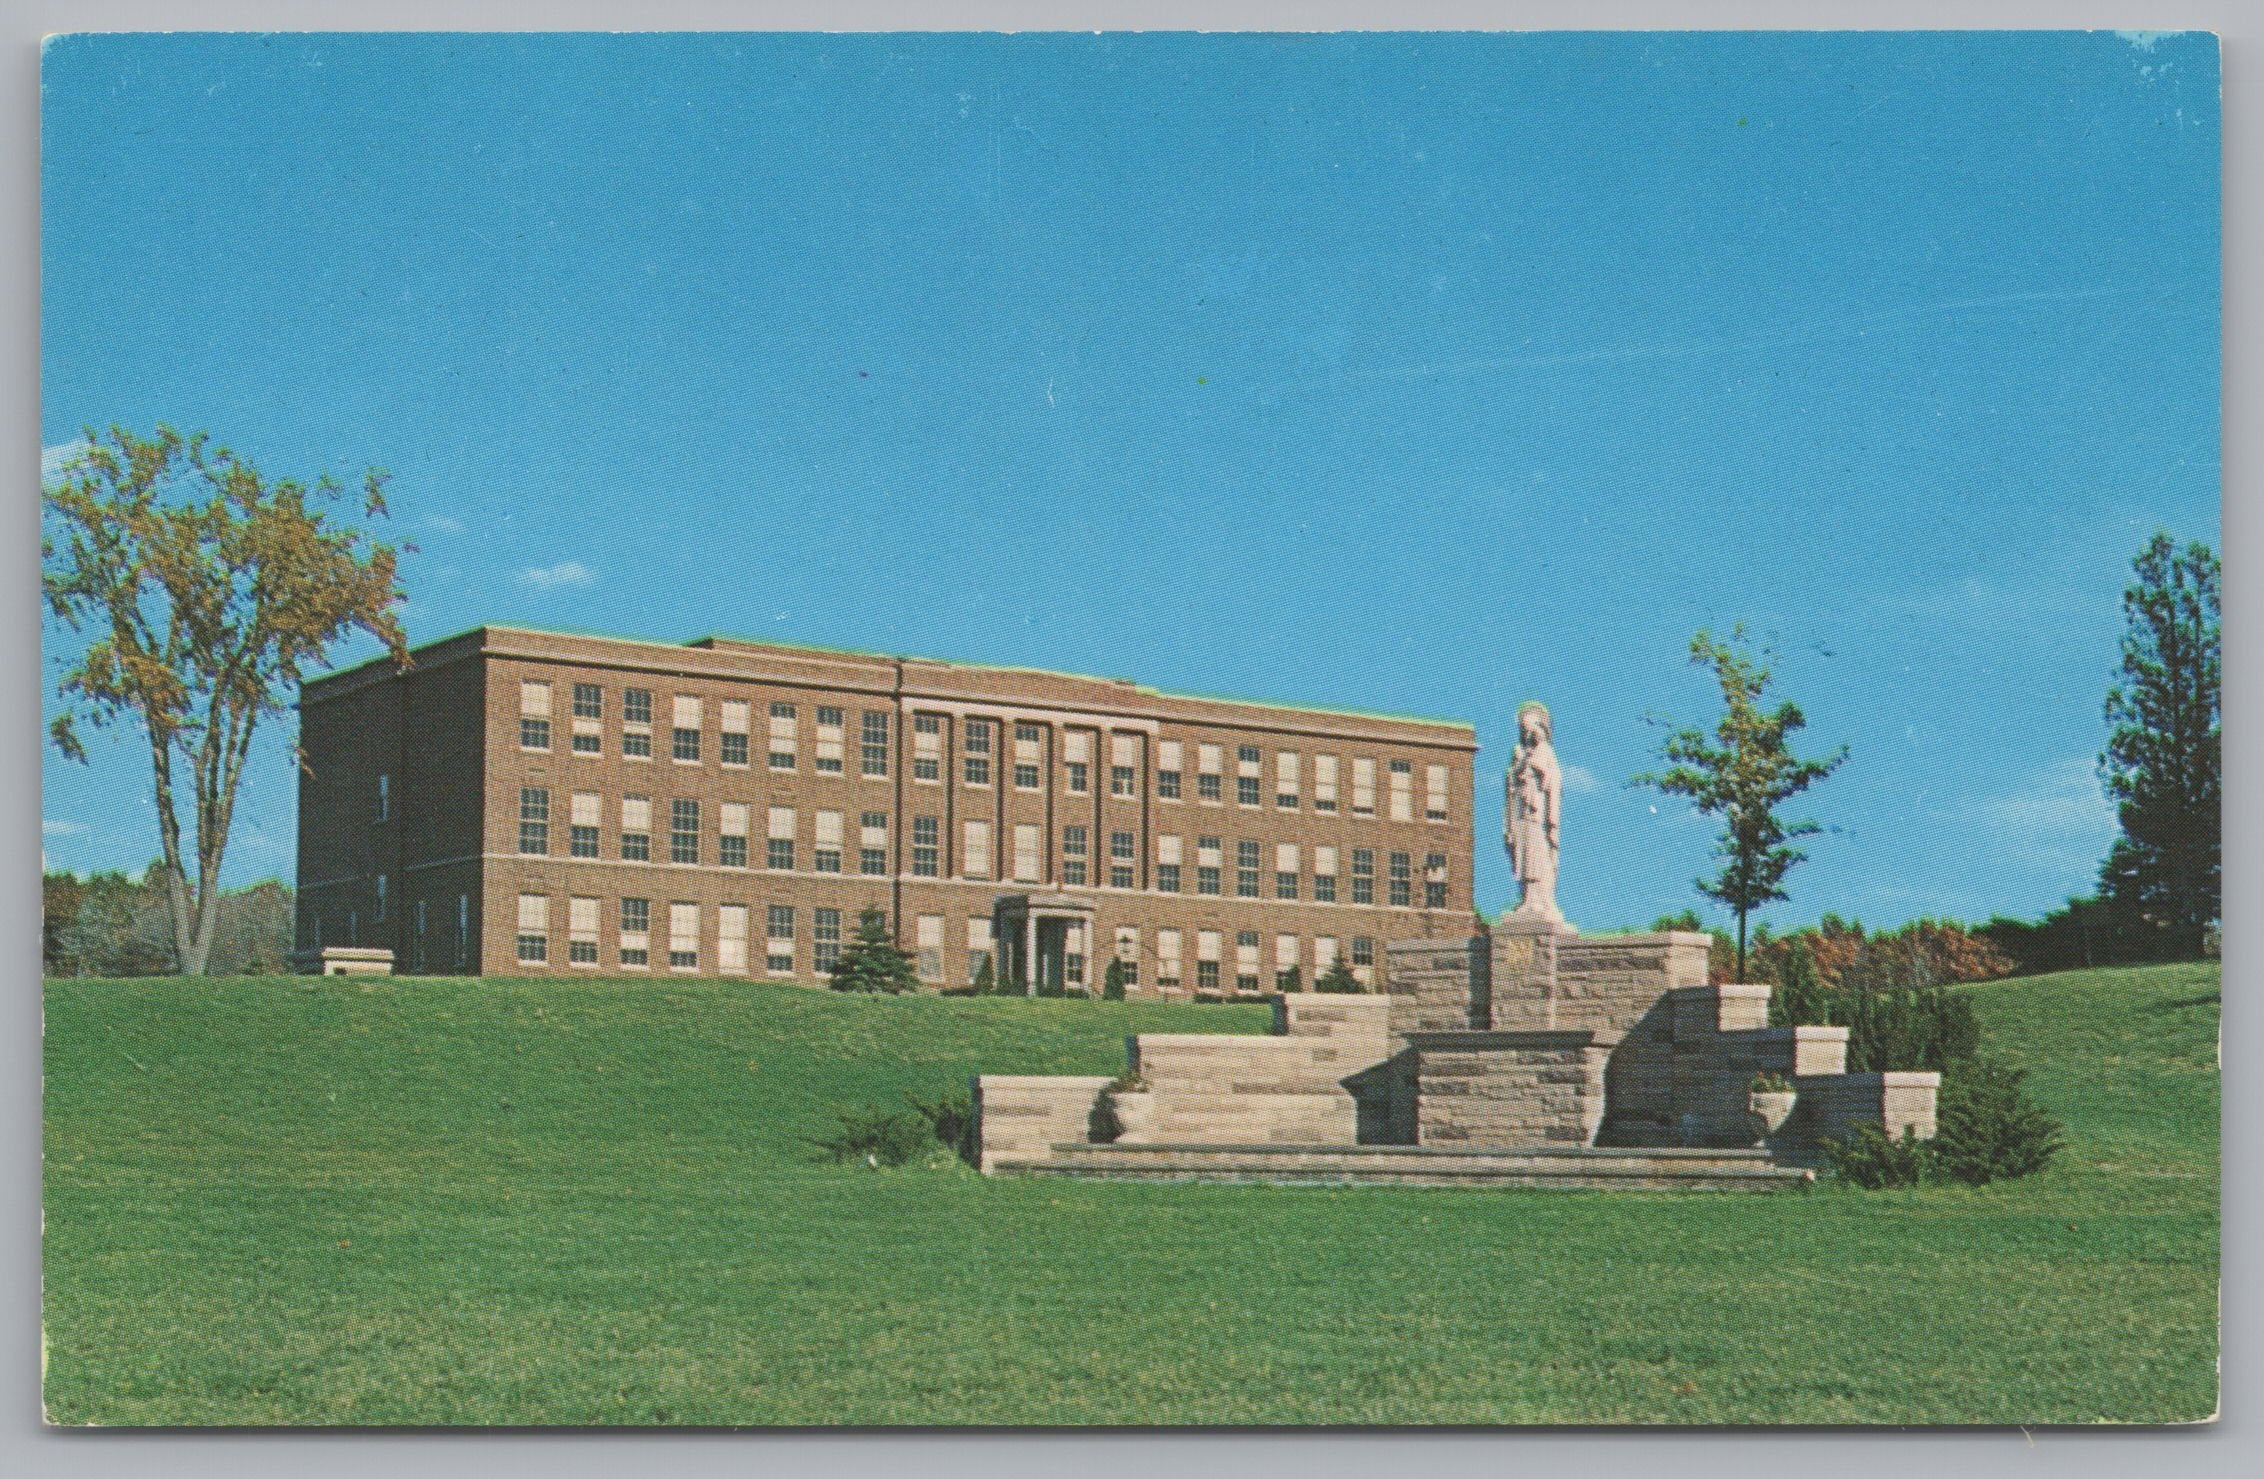 Sullivan Hall, Liberal Arts Building, Merrimack College, Andover, Massachusetts, VTG PC